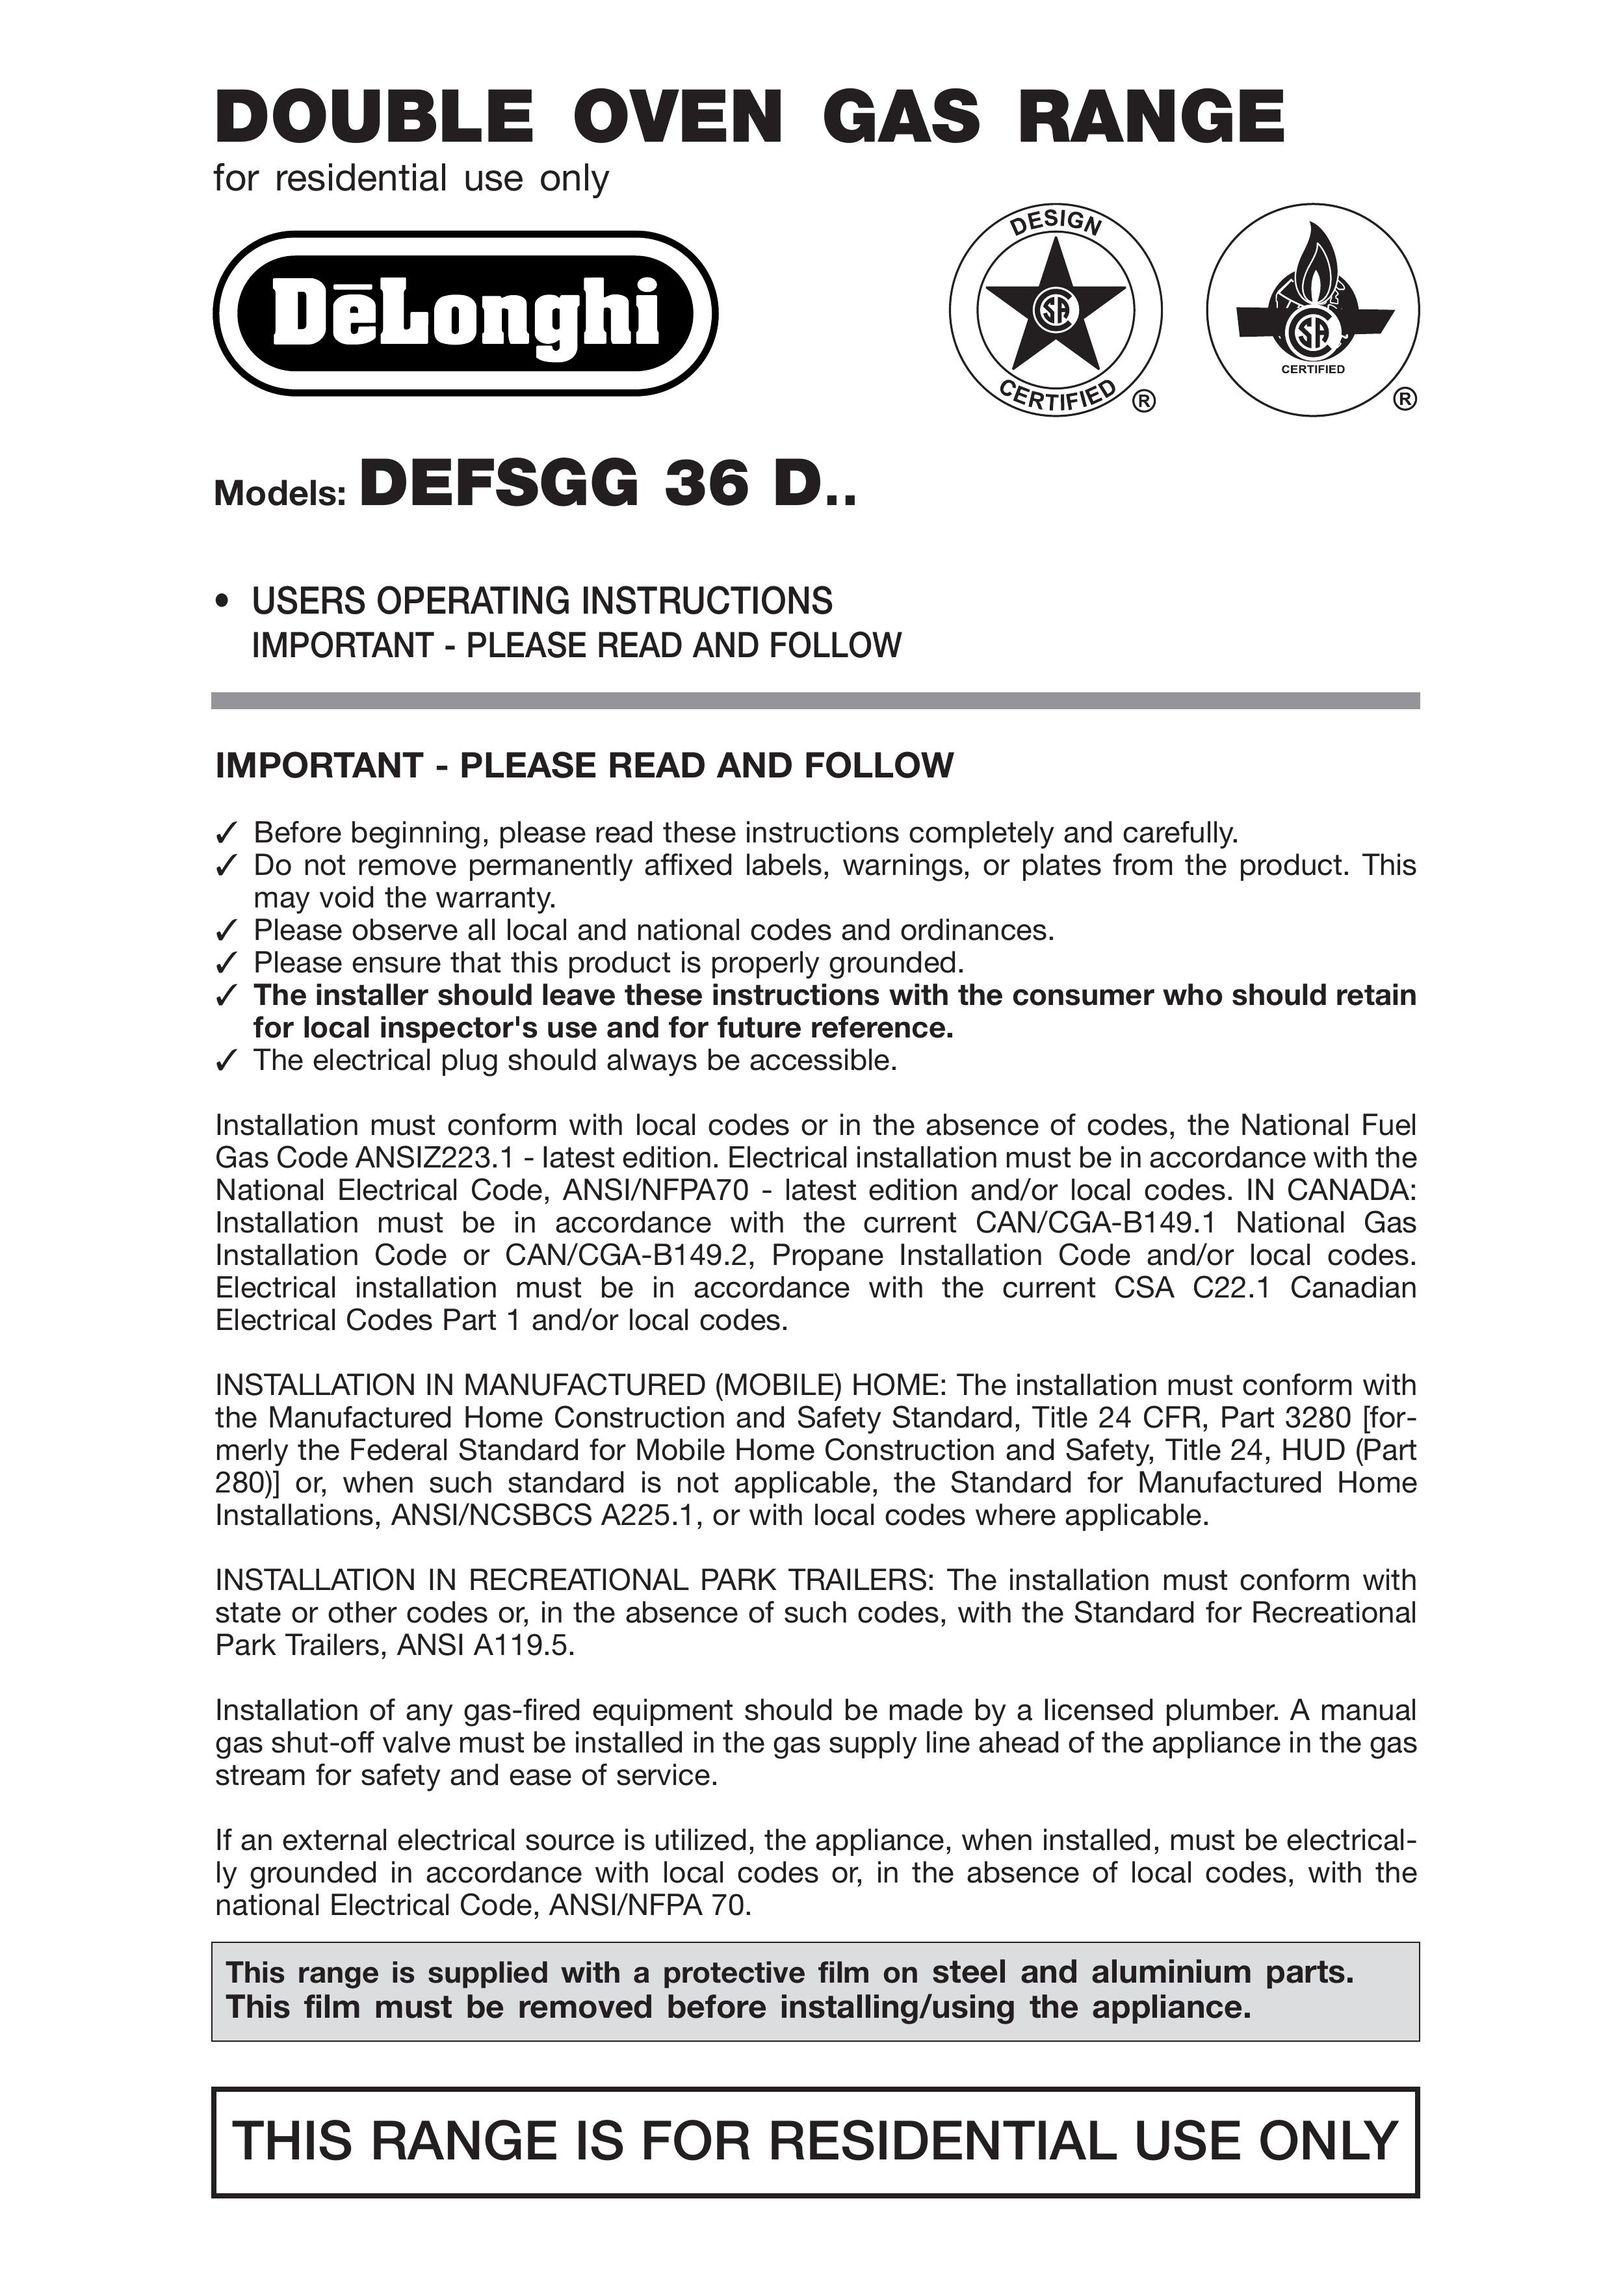 DeLonghi DESFGG36 Double Oven User Manual